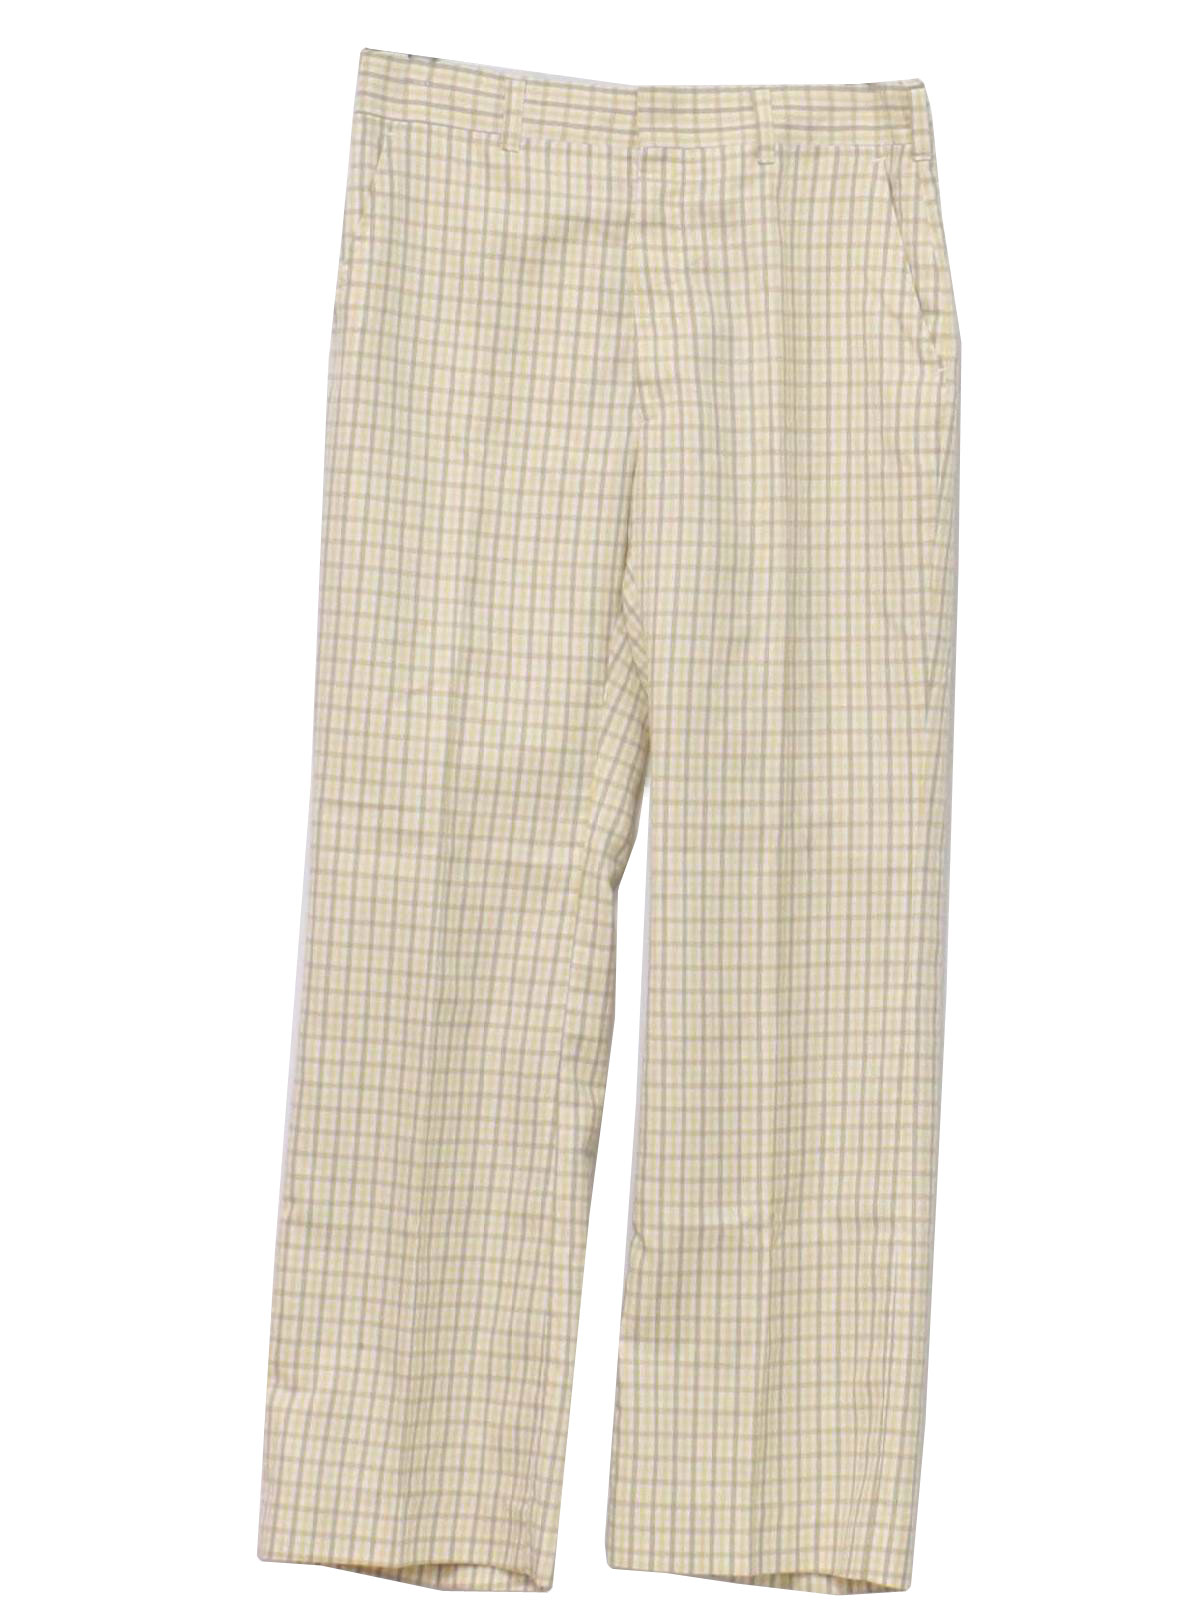 70s Retro Pants: 70s -Haggar Slacks- Mens white, brown and yellow small ...